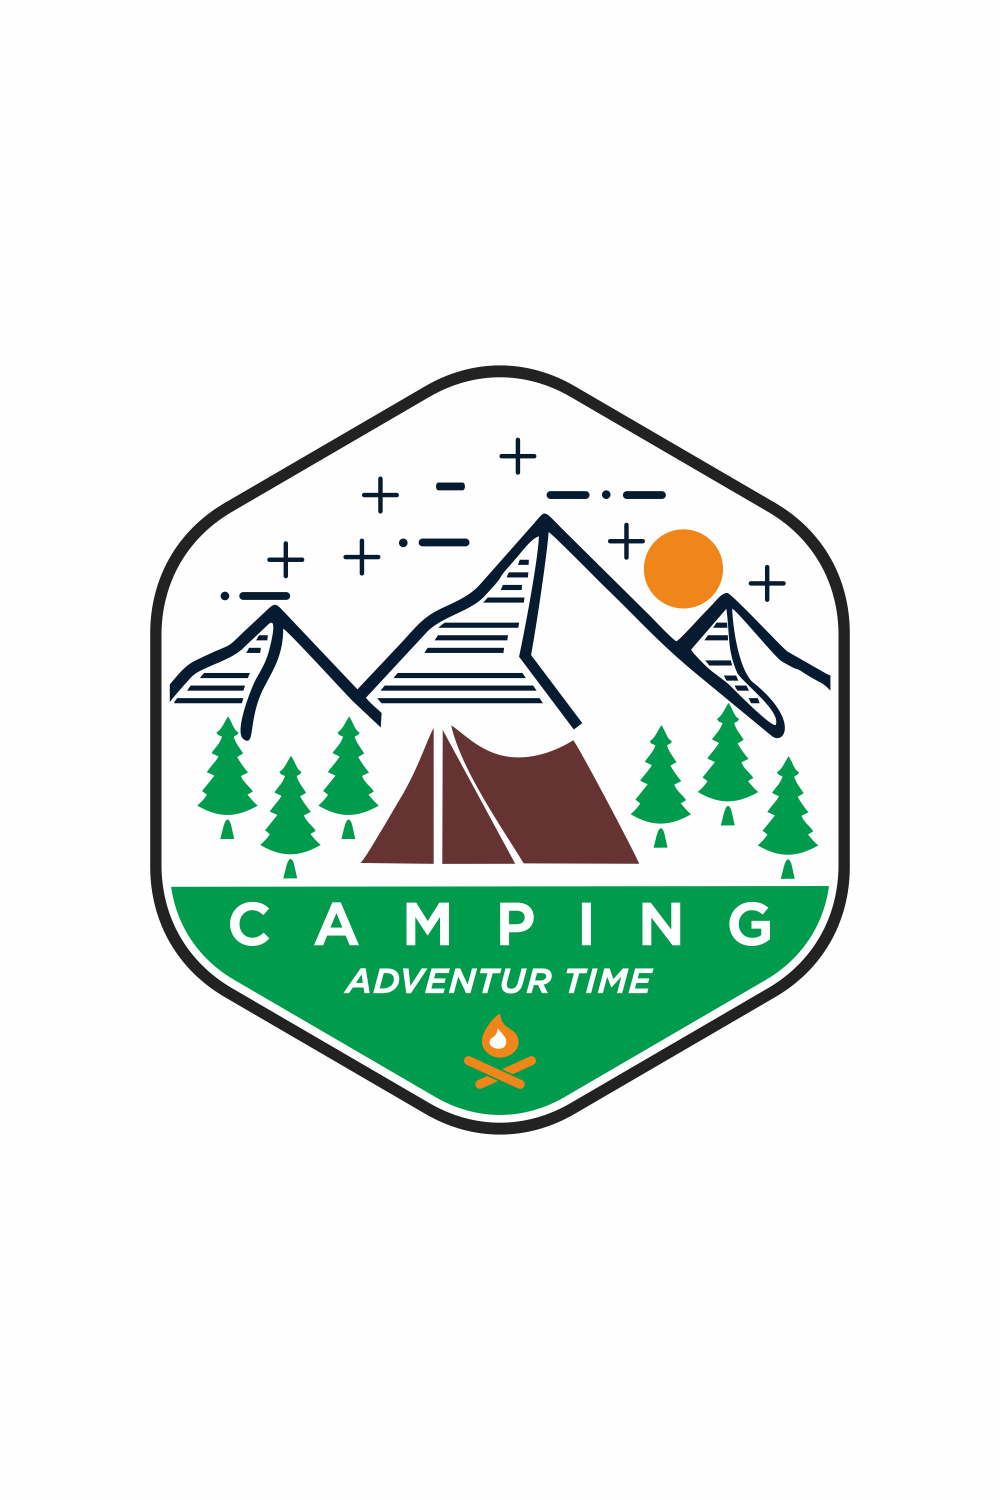 Badge emblem outdoor adventure camping logo illustrations template pinterest preview image.